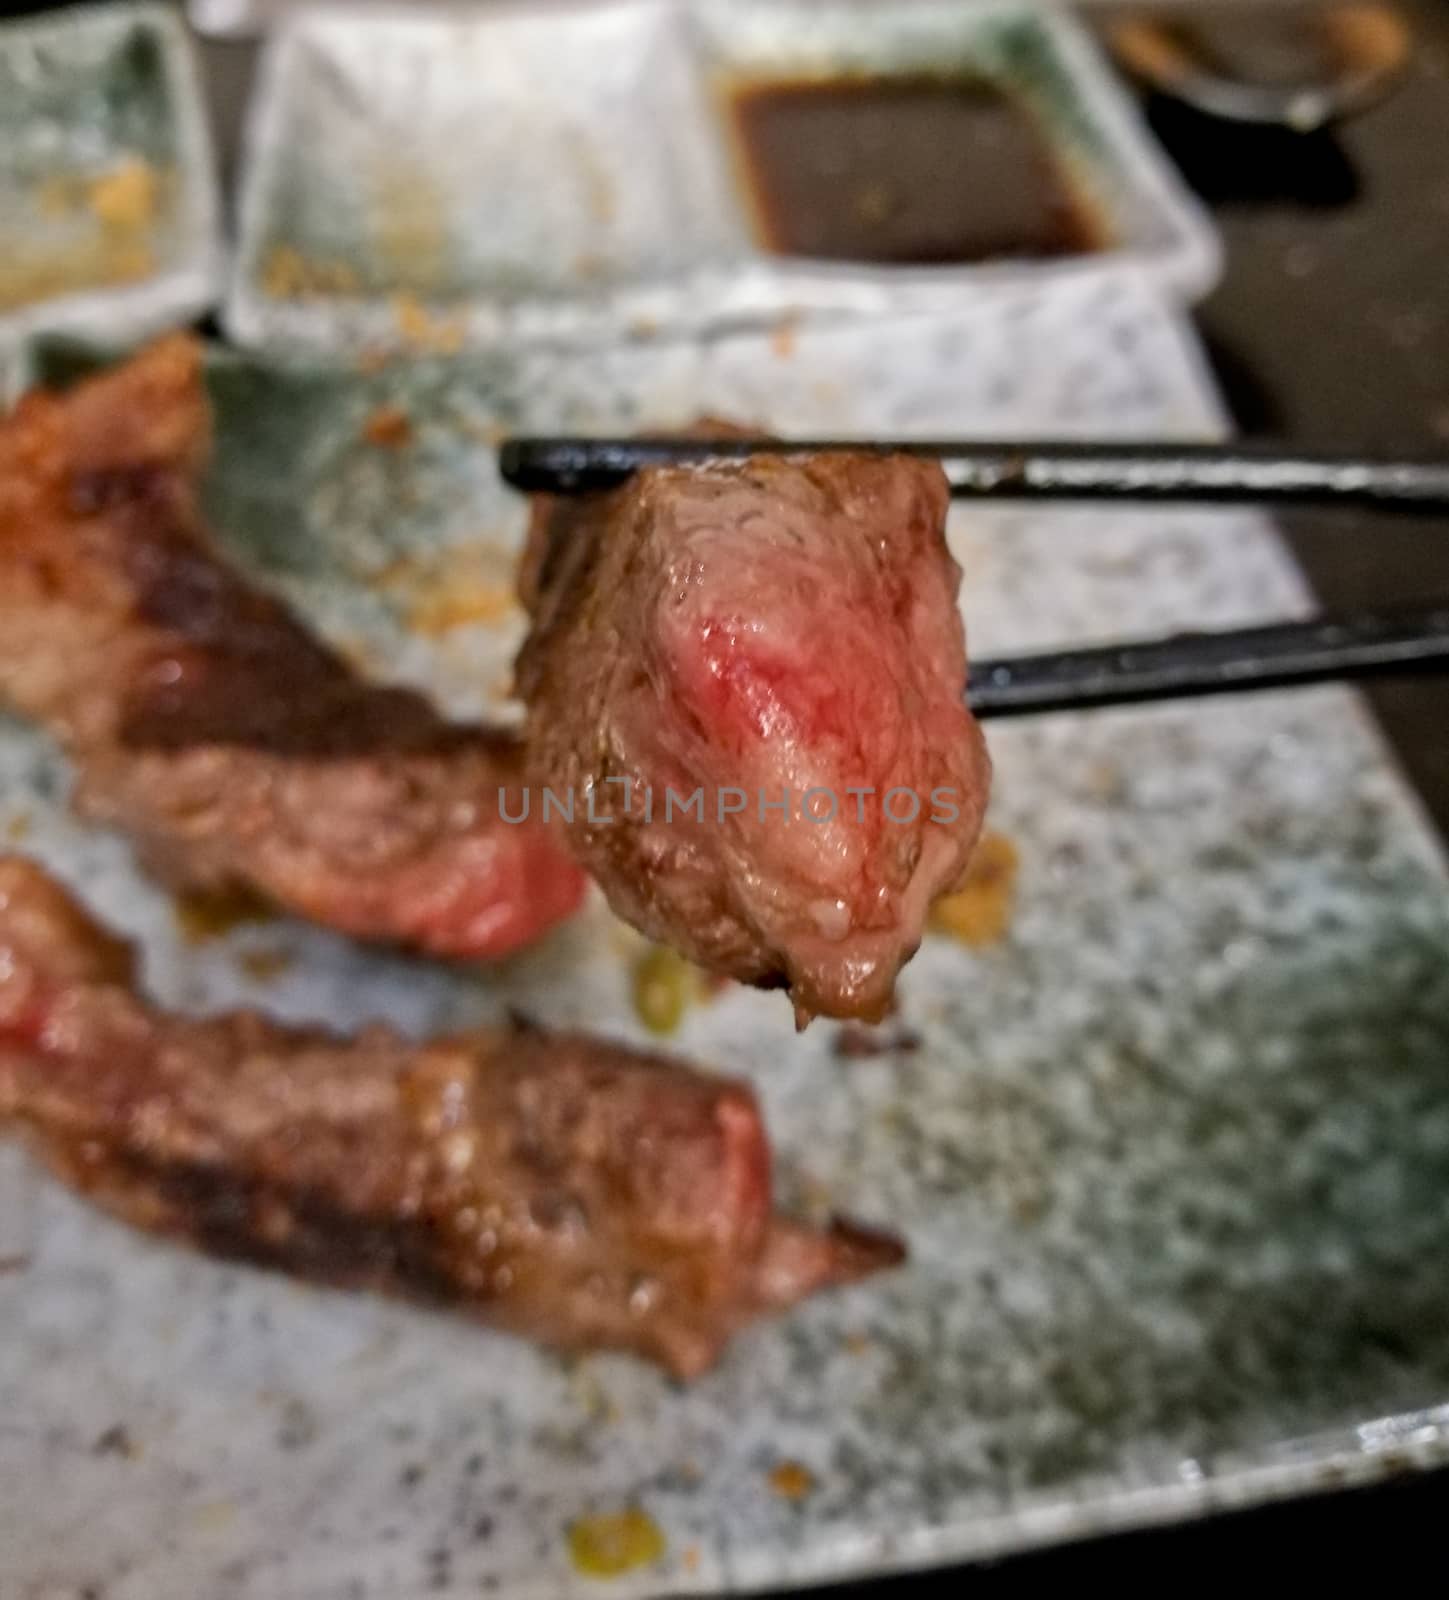 Superb legendary Wagyu beef grilled medium rare with chopsticks